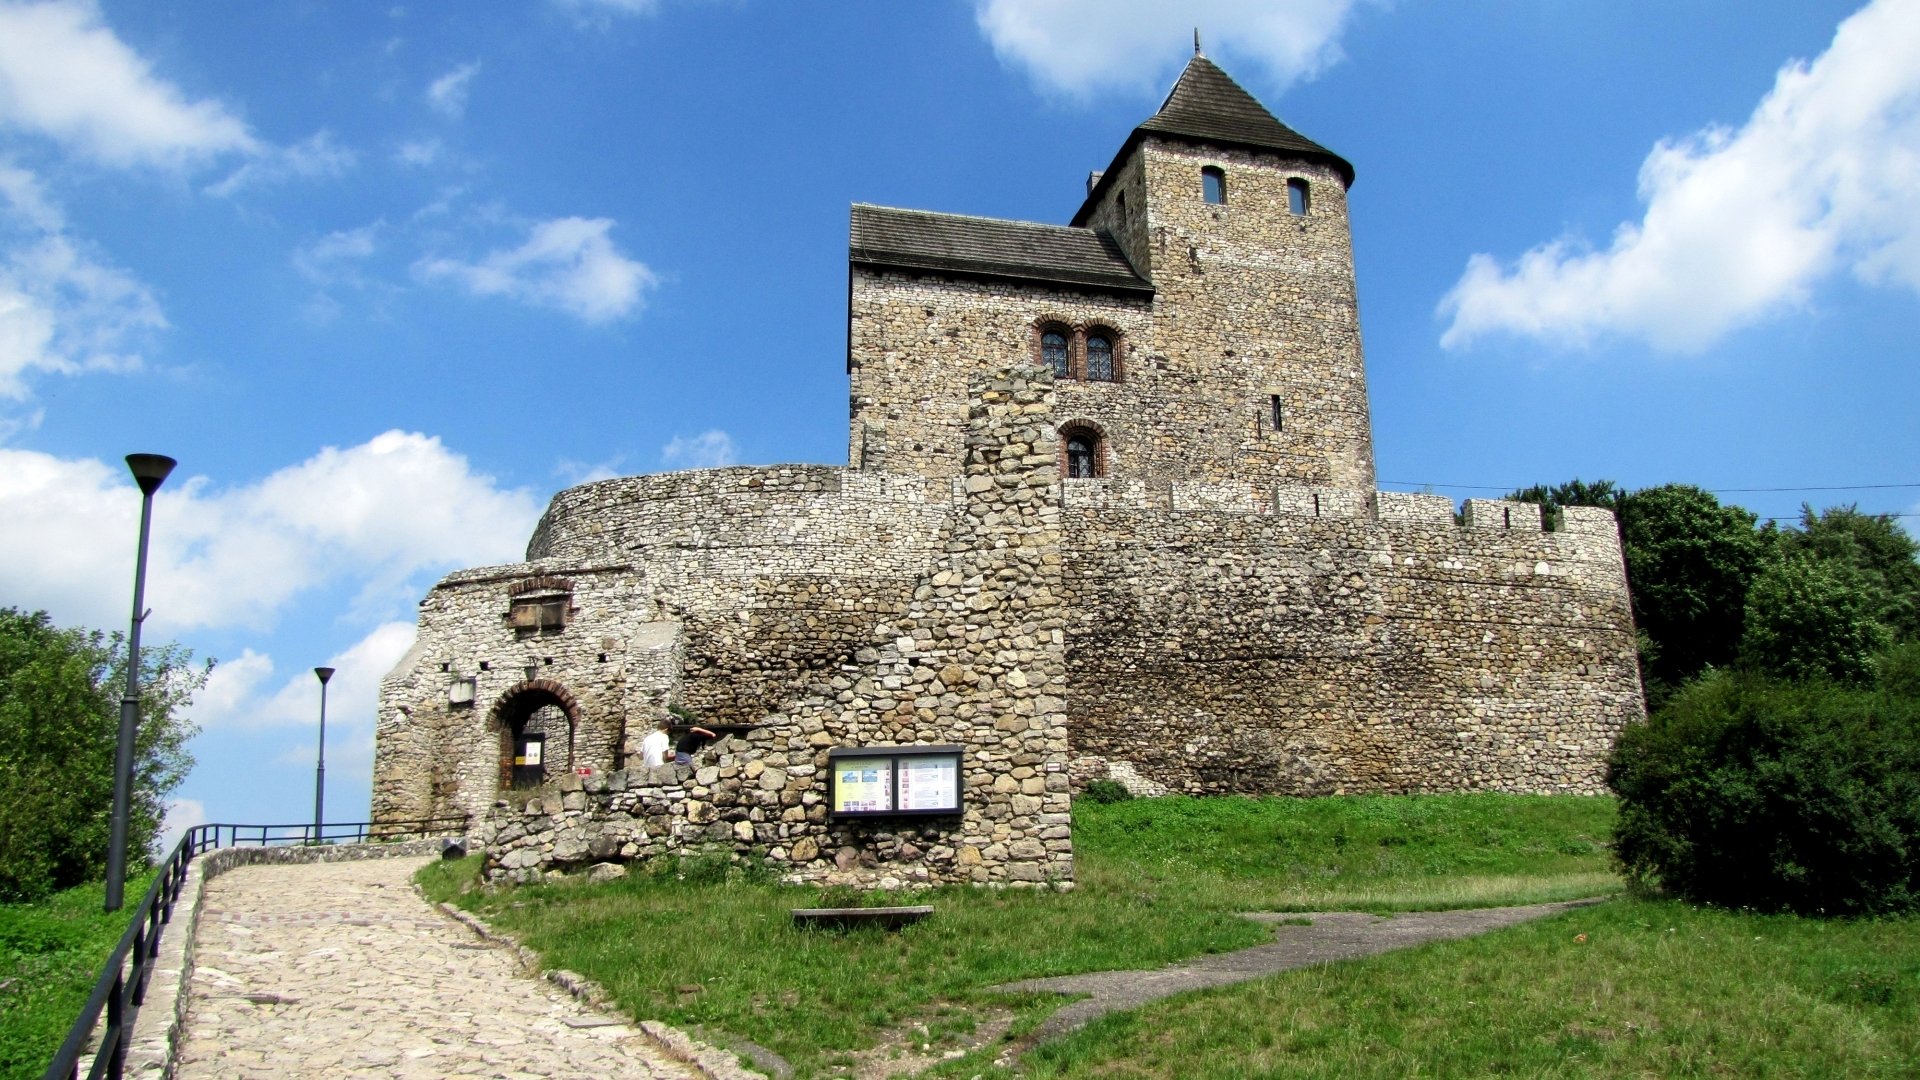 Hrad Bedzin Bedzin Castle